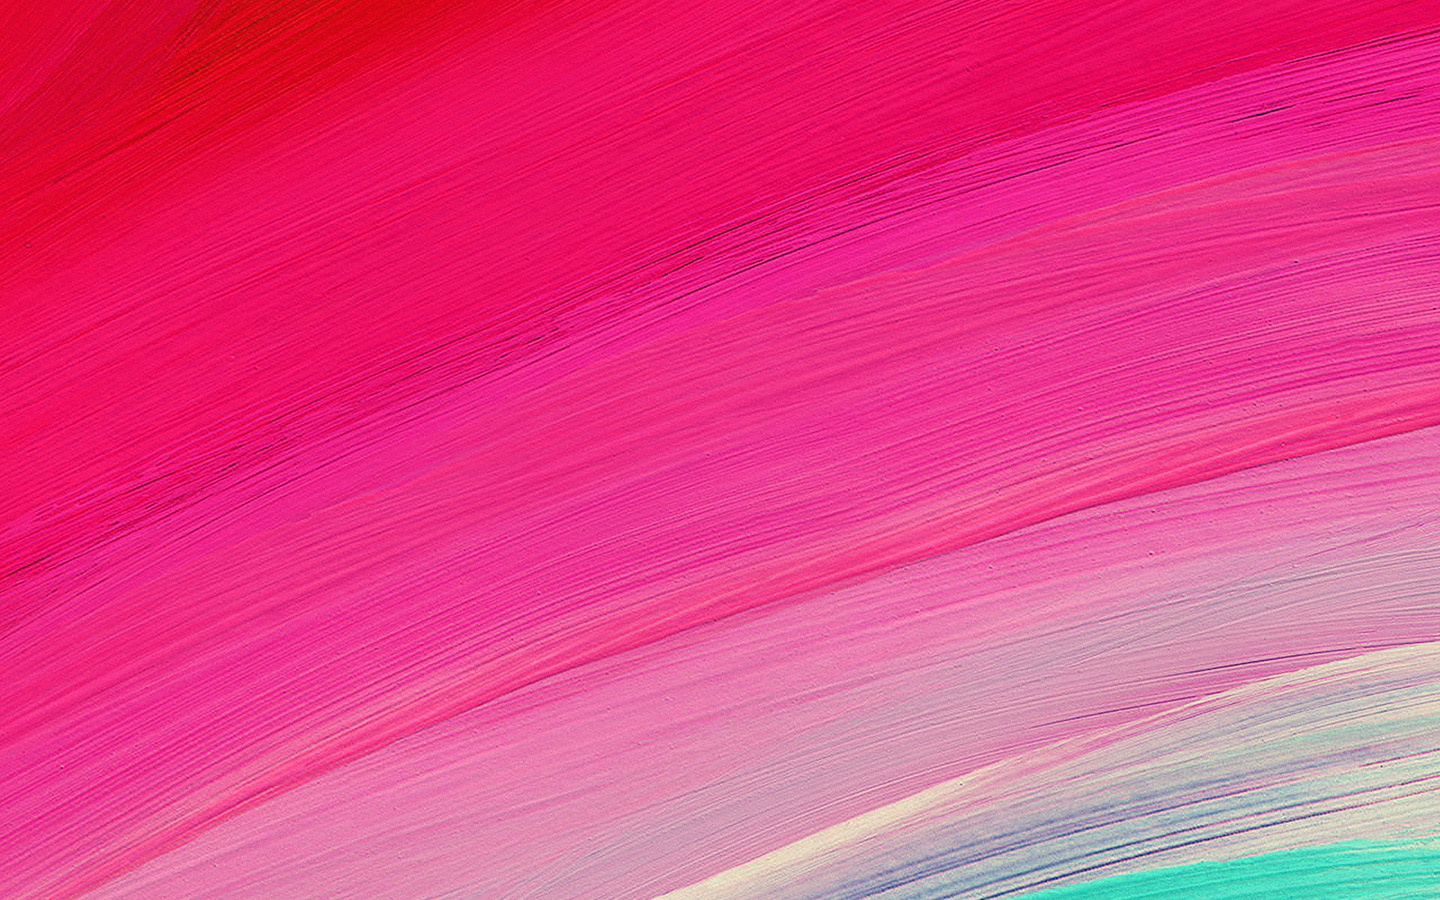 wallpaper for desktop, laptop. rainbow swirl line abstract pattern magenta green